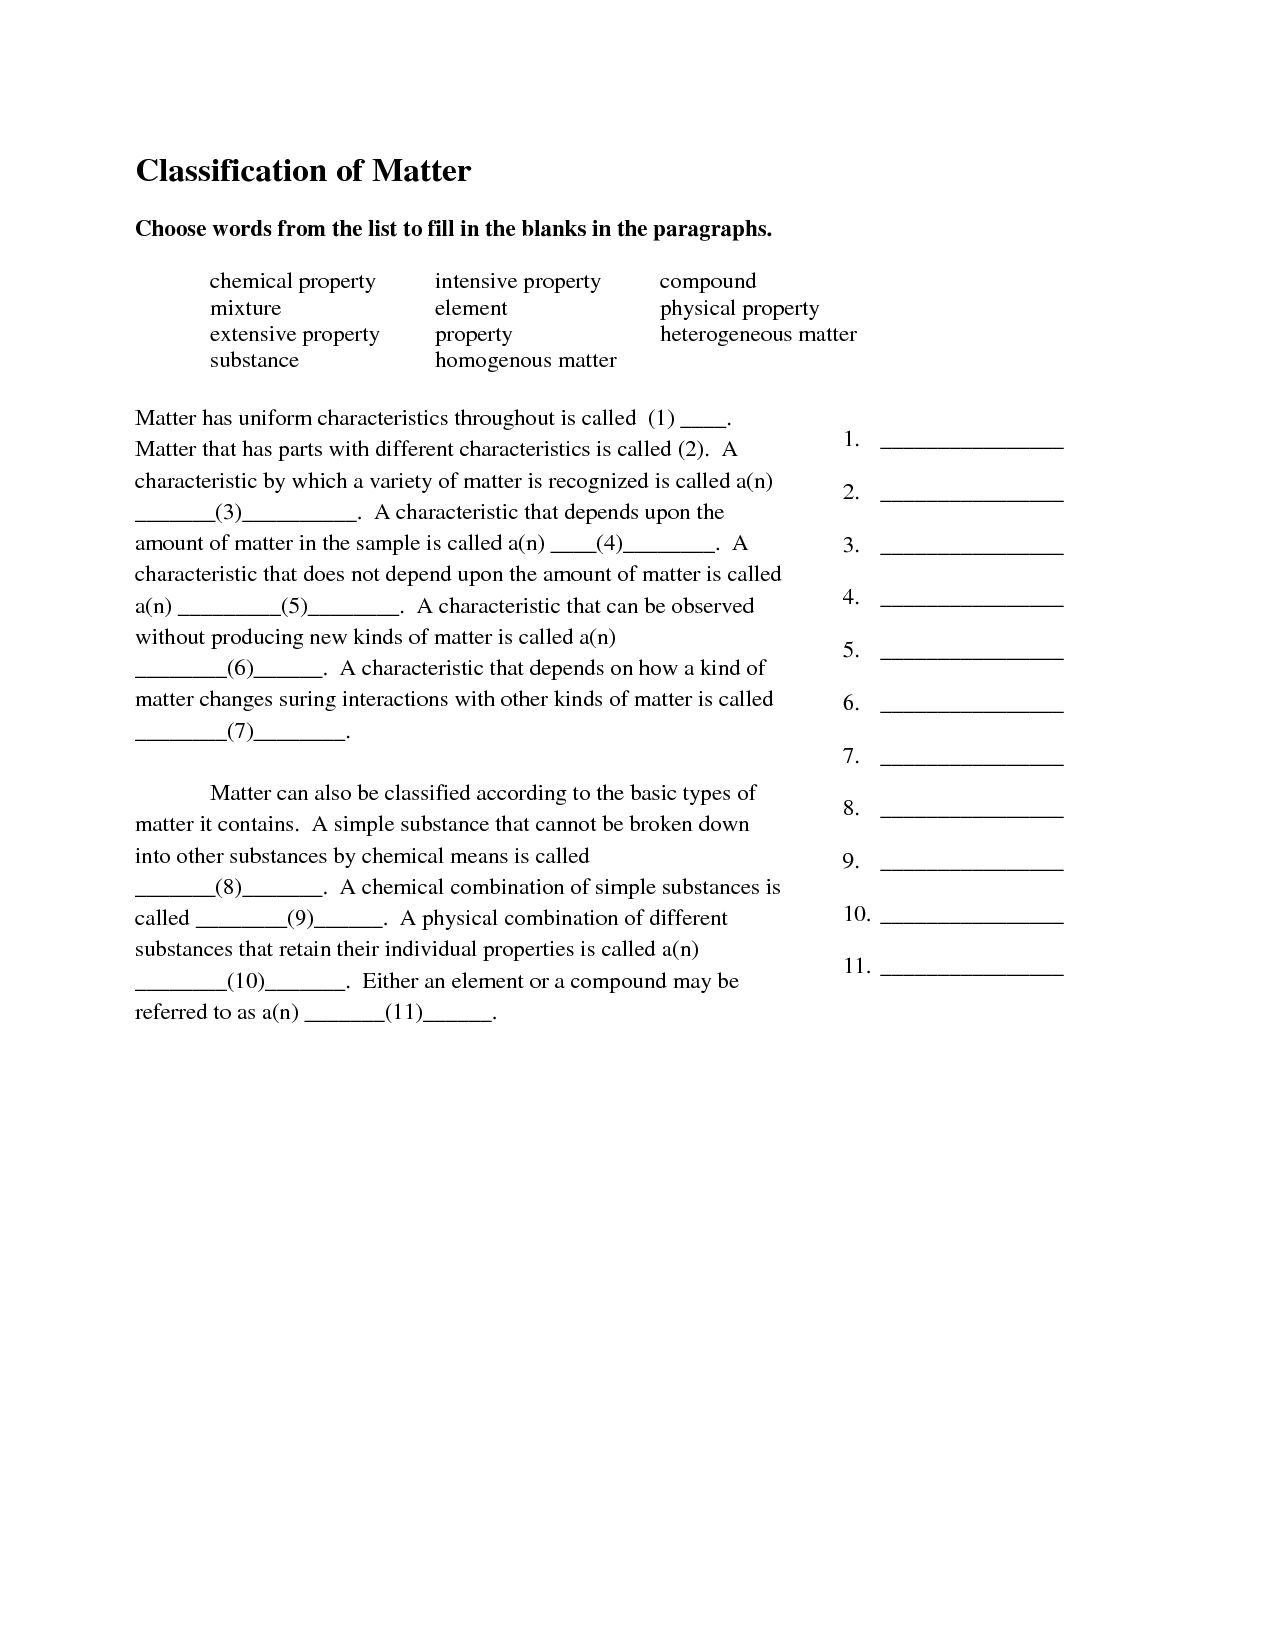 Classifying Matter Worksheet Answer Key